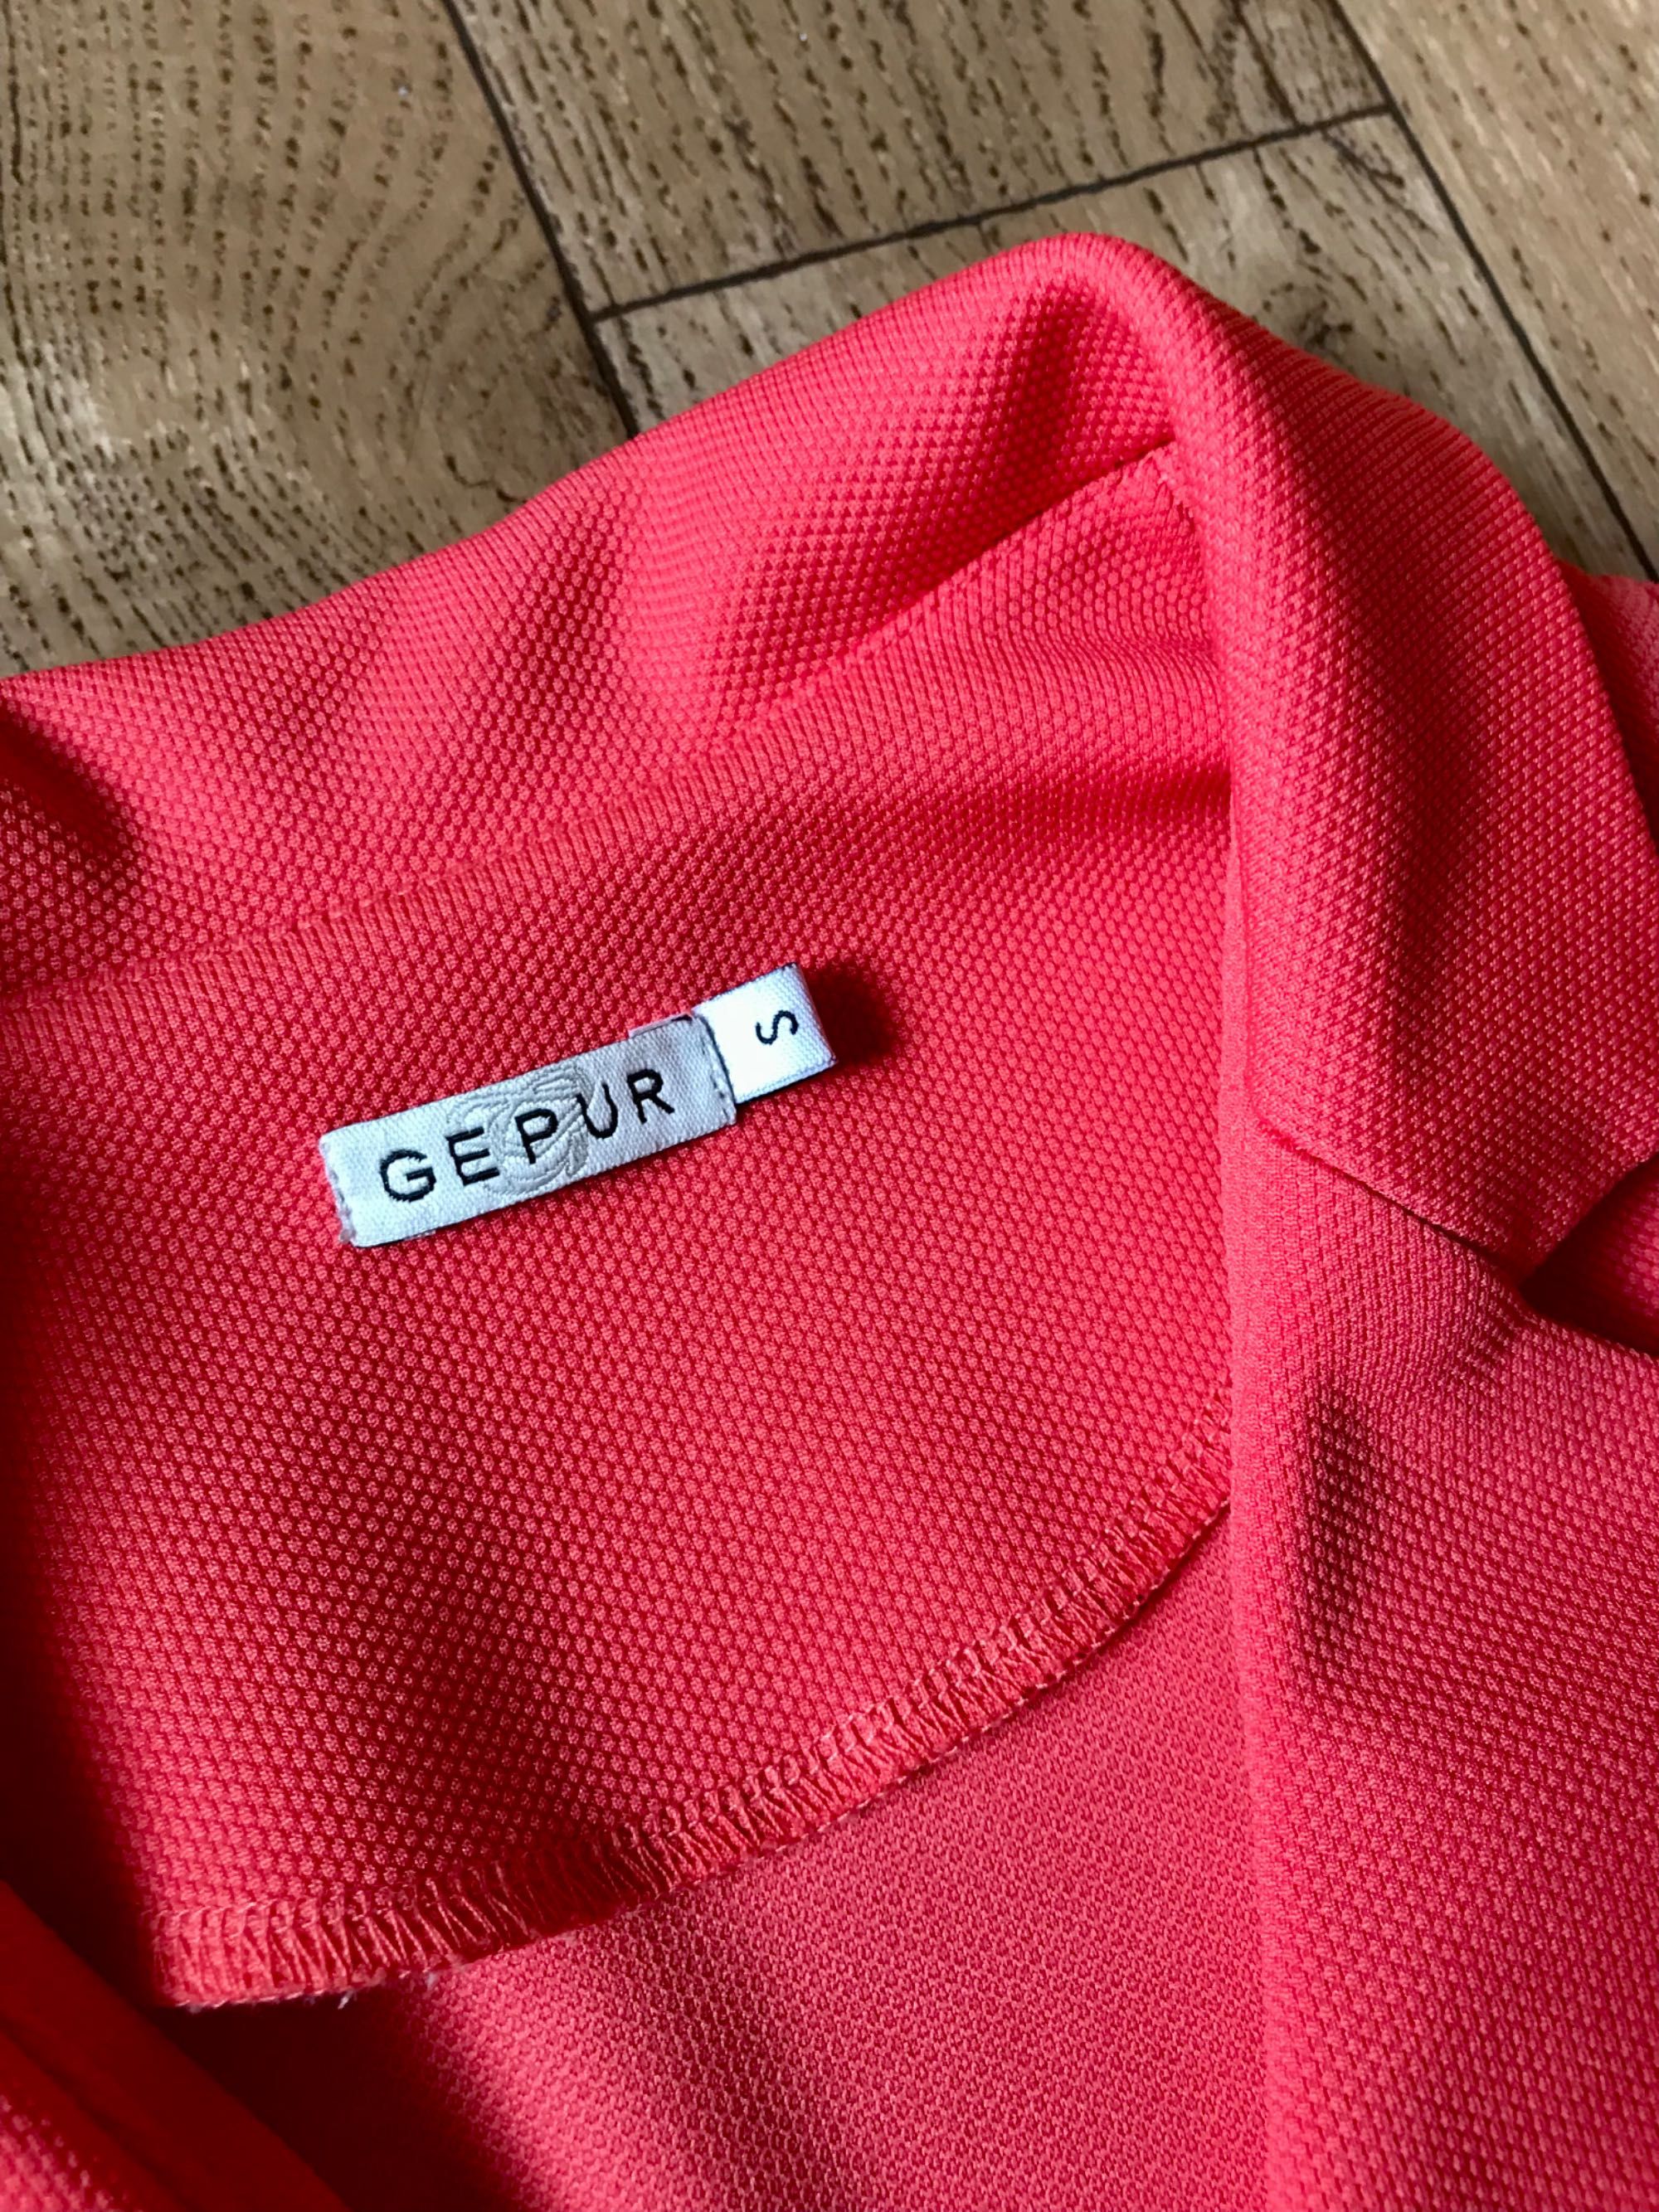 Платье бренда Gepur, S